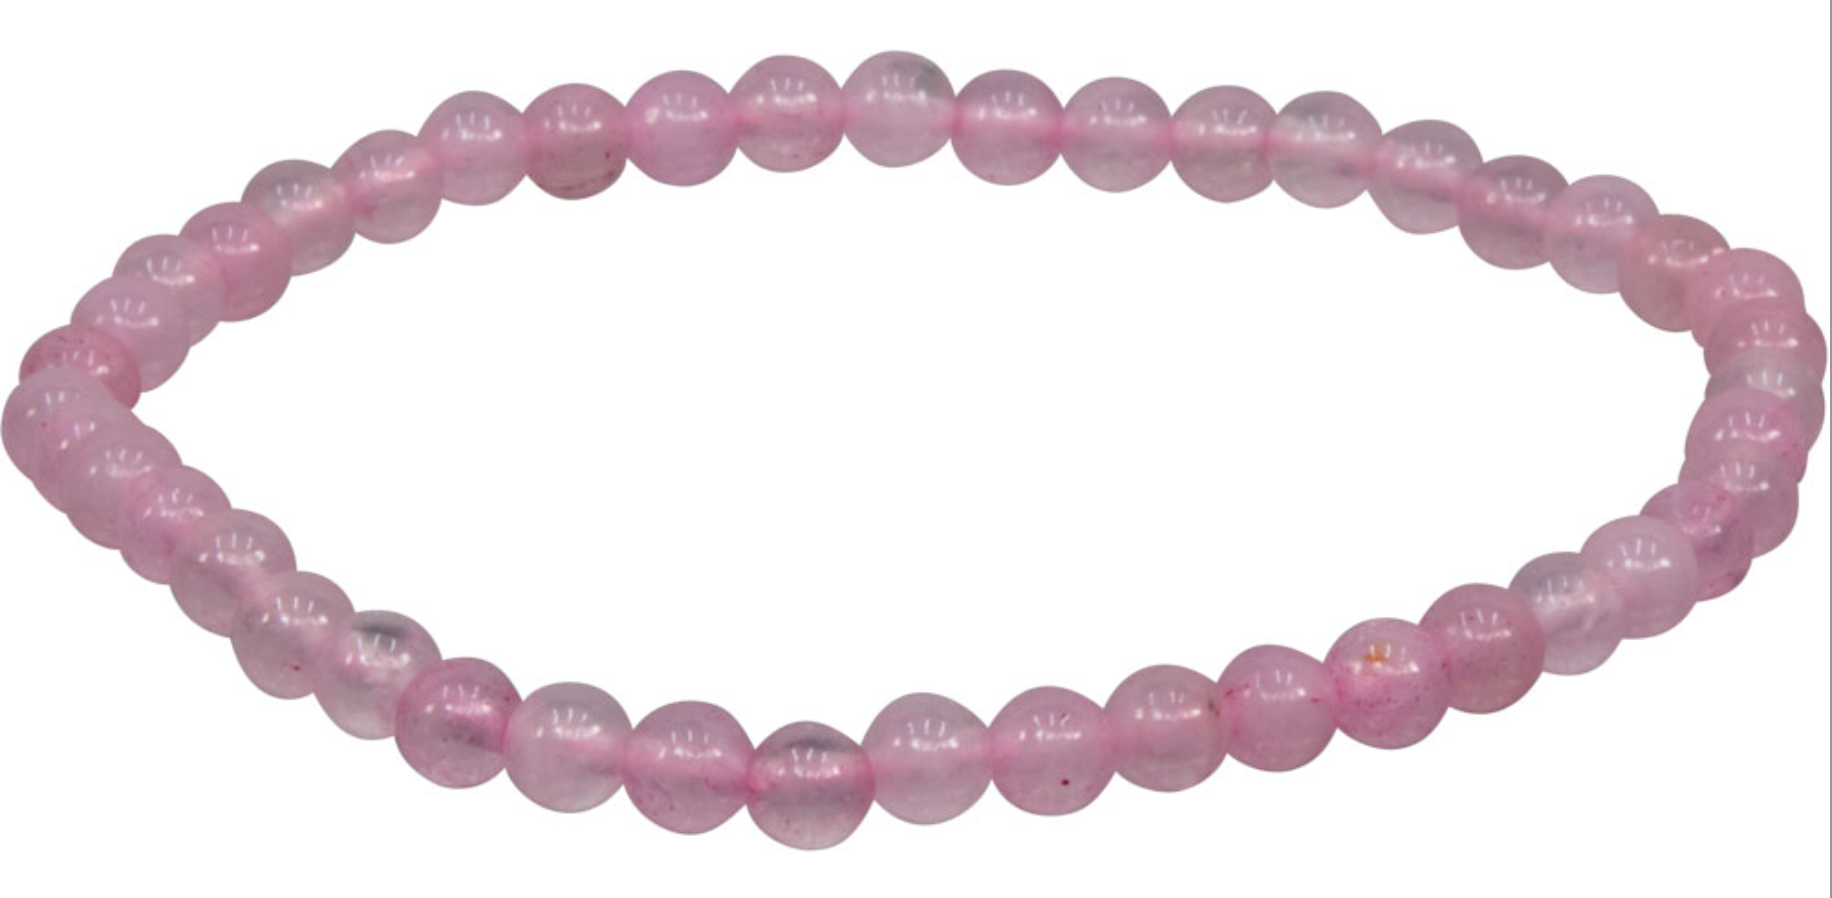 Solid Tone Stone Beads Charm Bracelet by Aloha 808: Pink